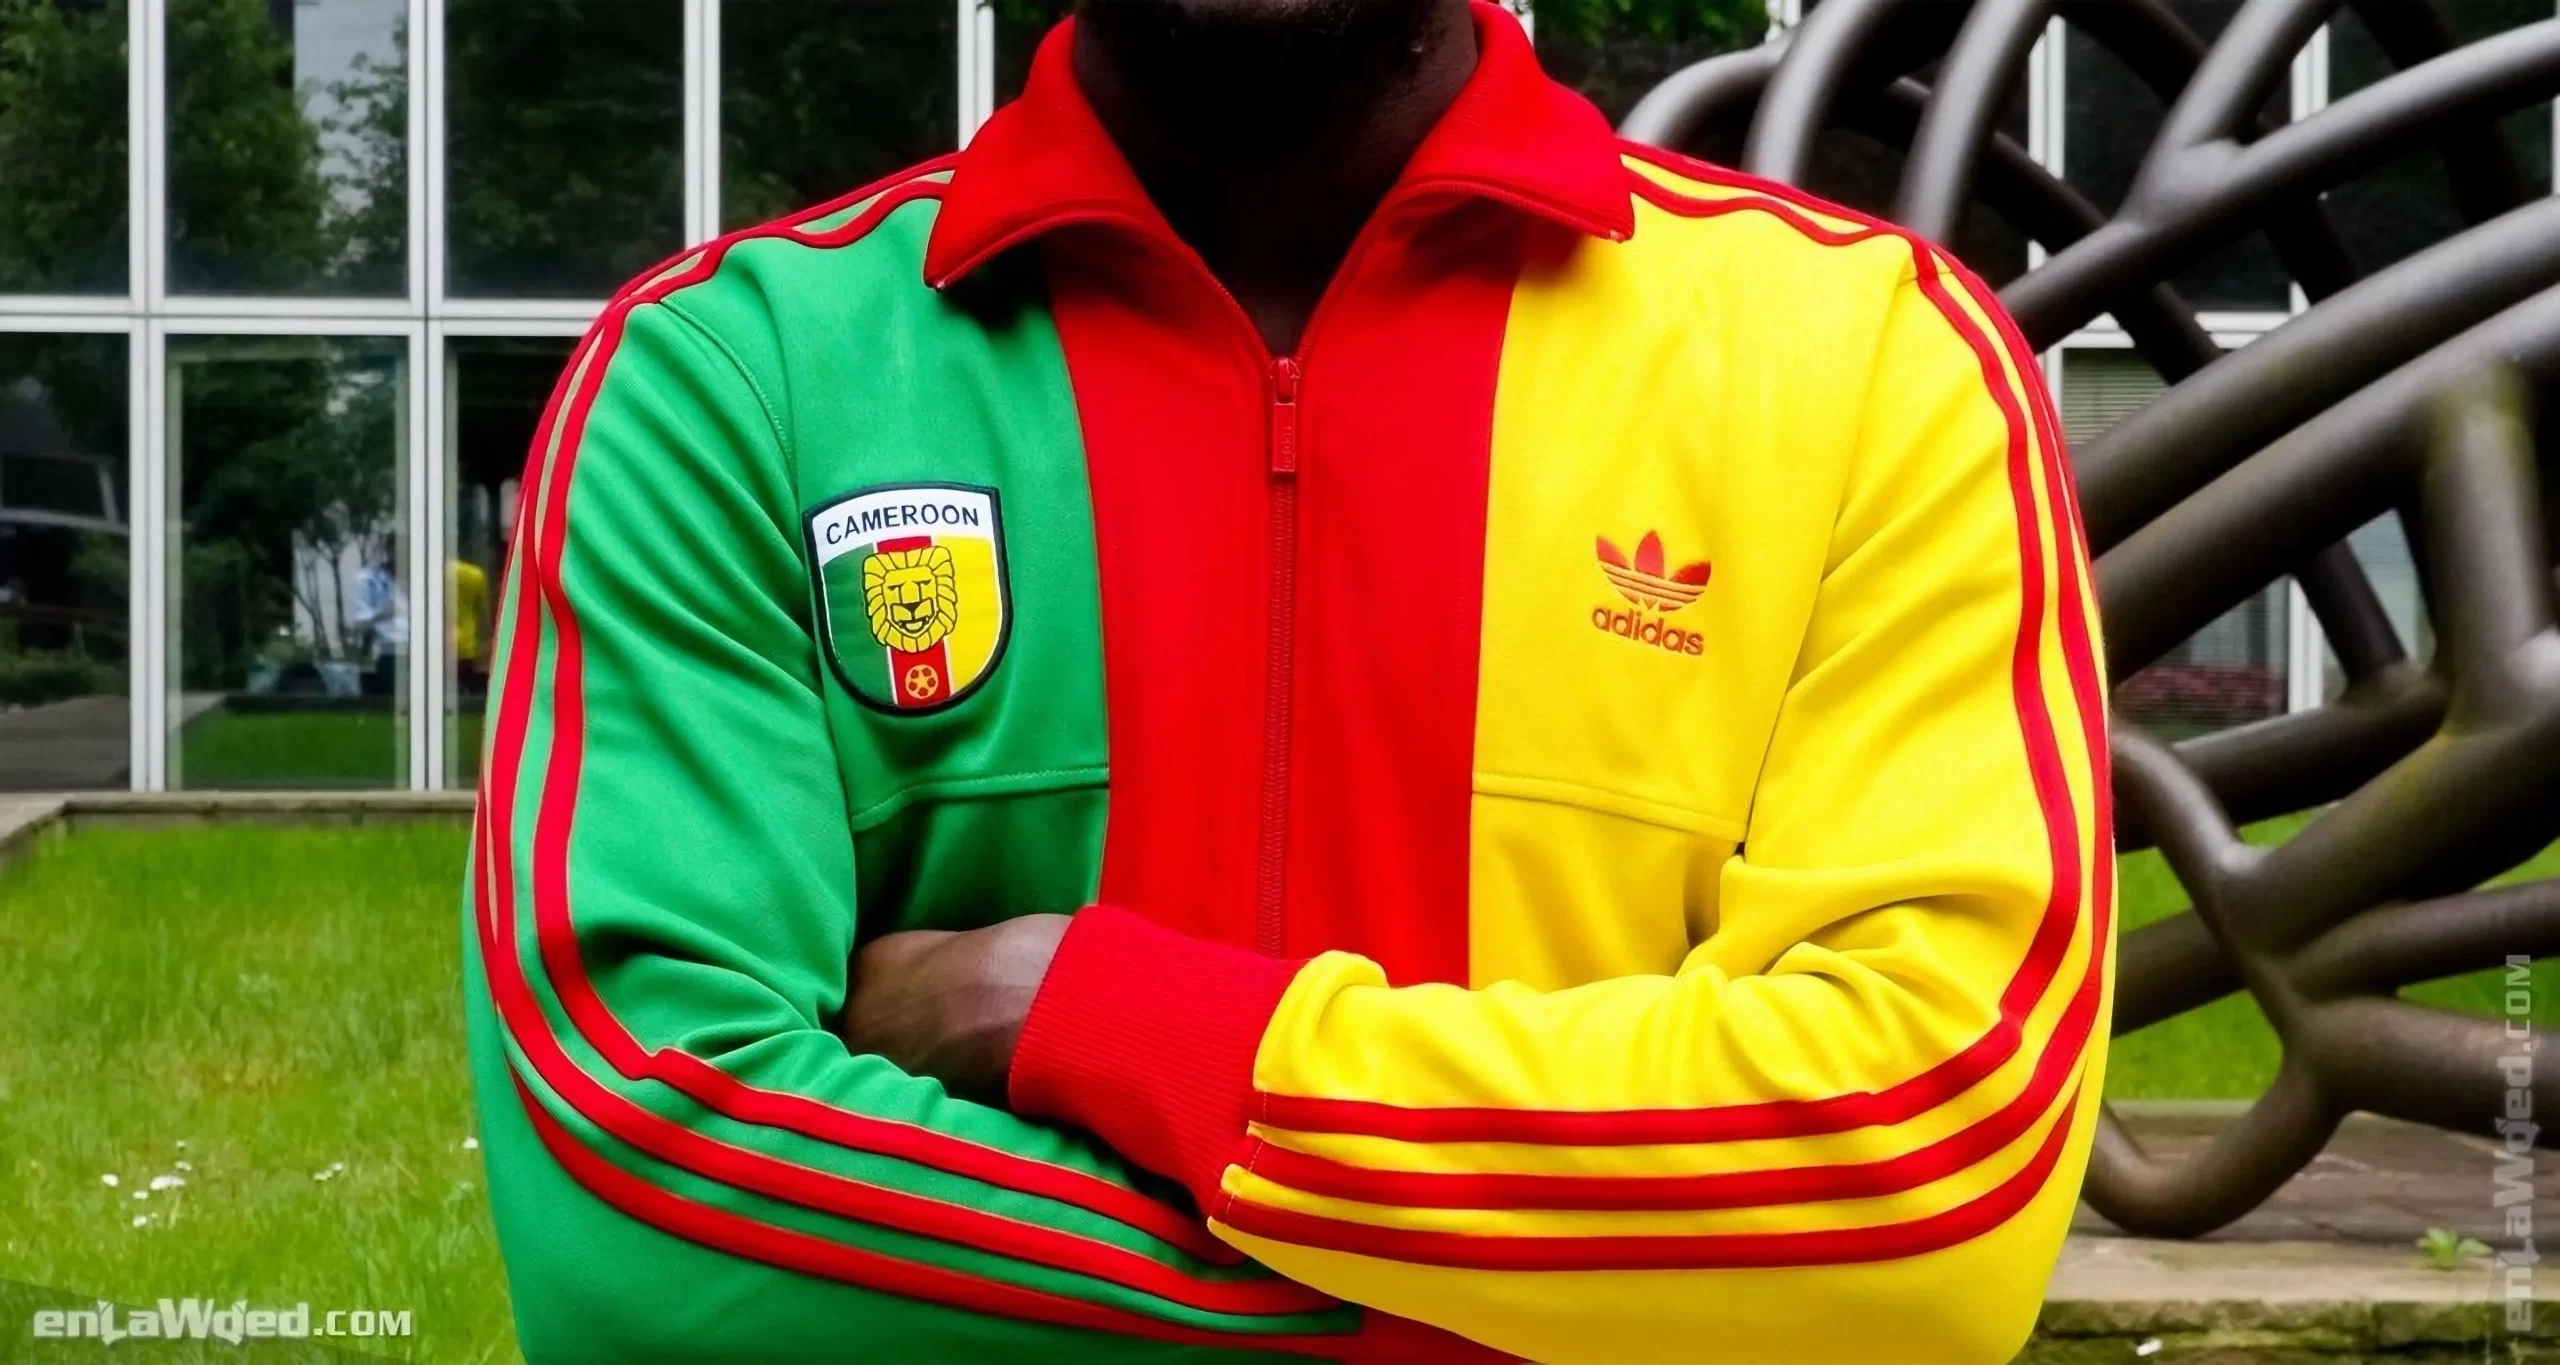 Men’s 2007 Cameroon Track Top by Adidas Originals: Jubilant (EnLawded.com file #lmchk90475ip2y122229kg9st)